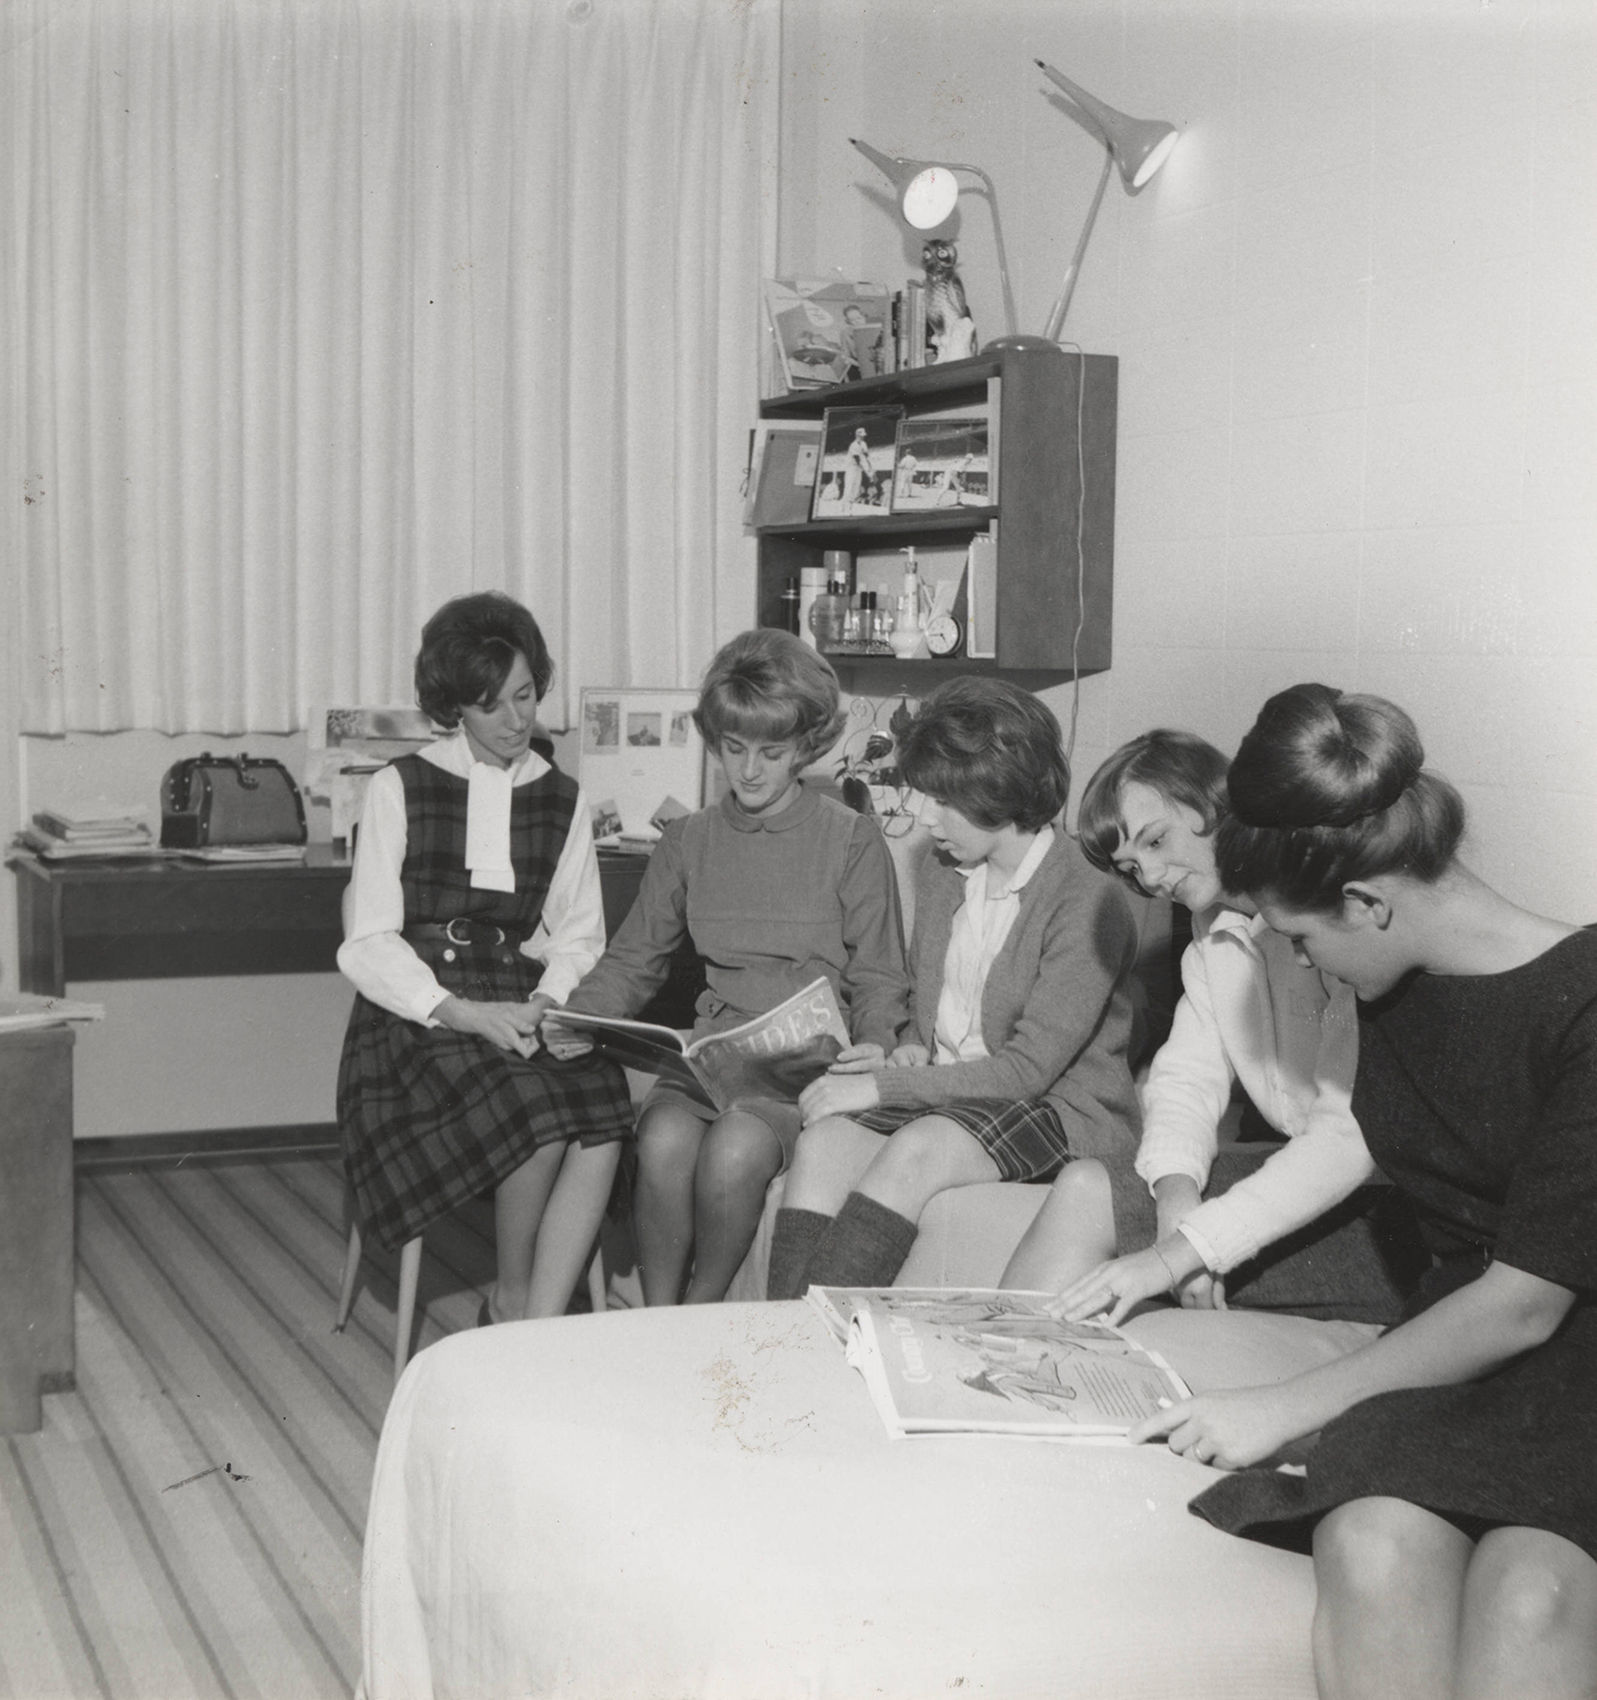 Rogers Hall Dorm Room, 1960s